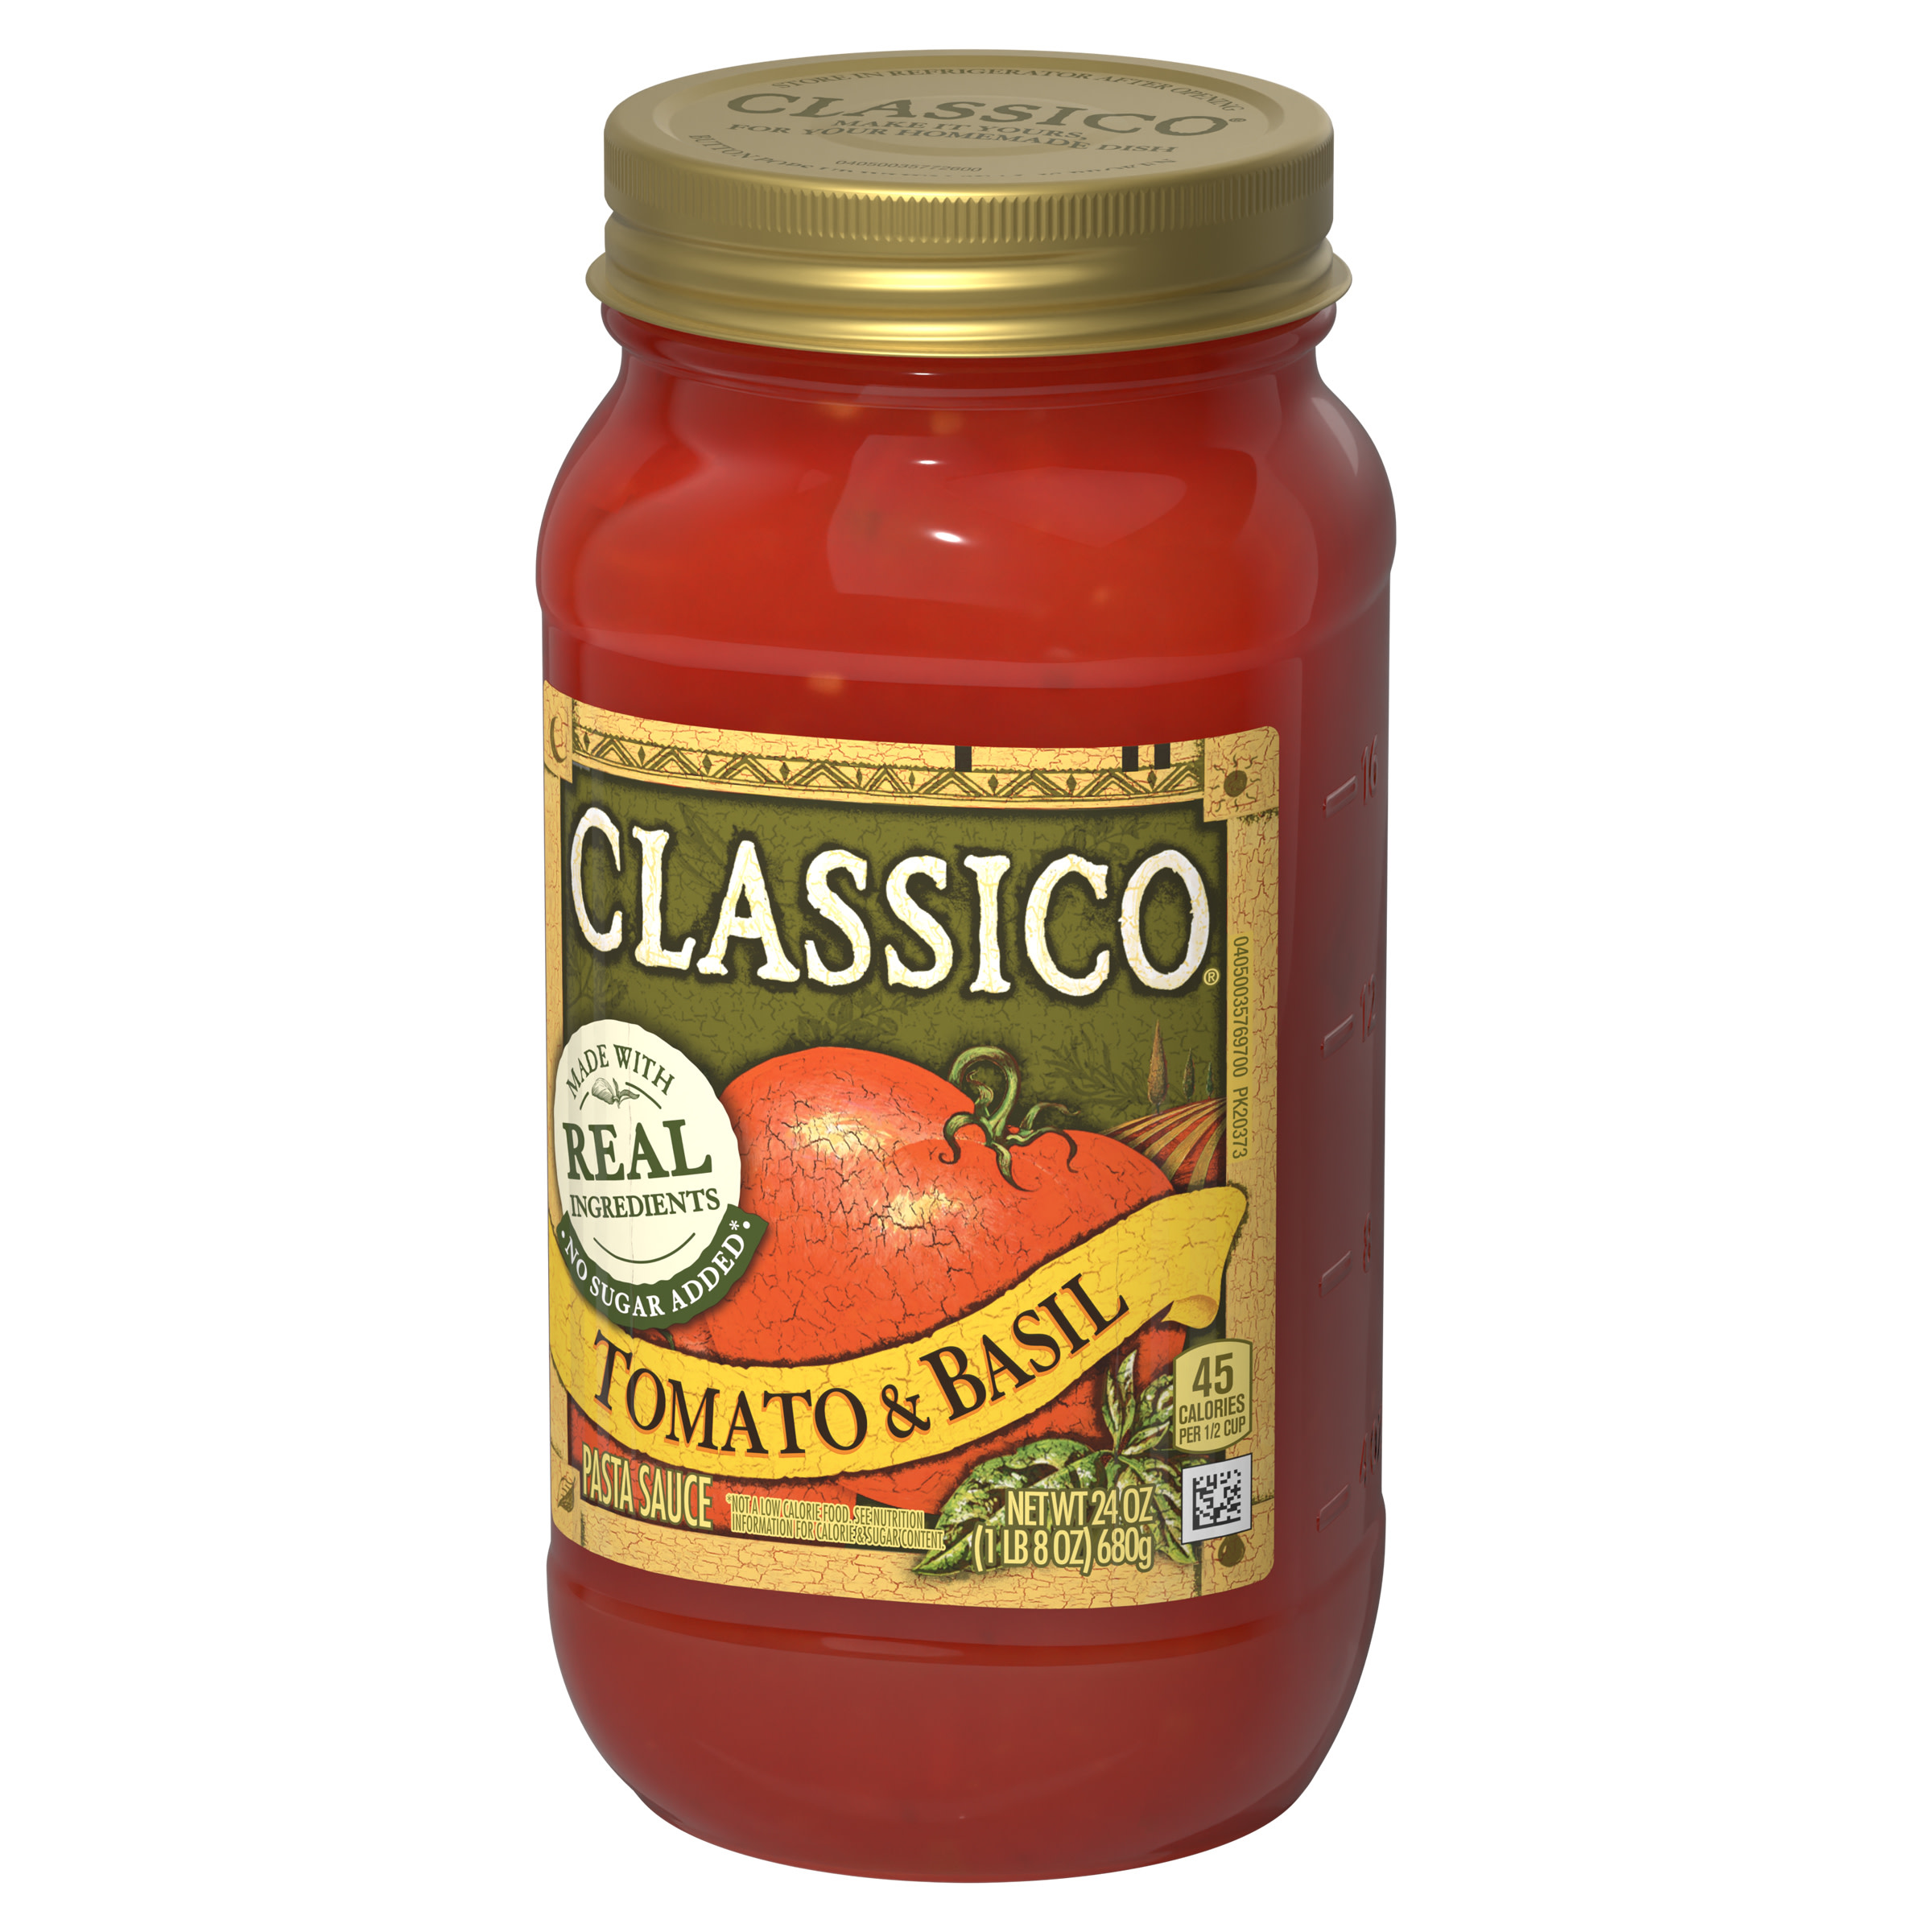 Classico Tomato & Basil Spaghetti Pasta Sauce, 24 oz. Jar - image 11 of 18